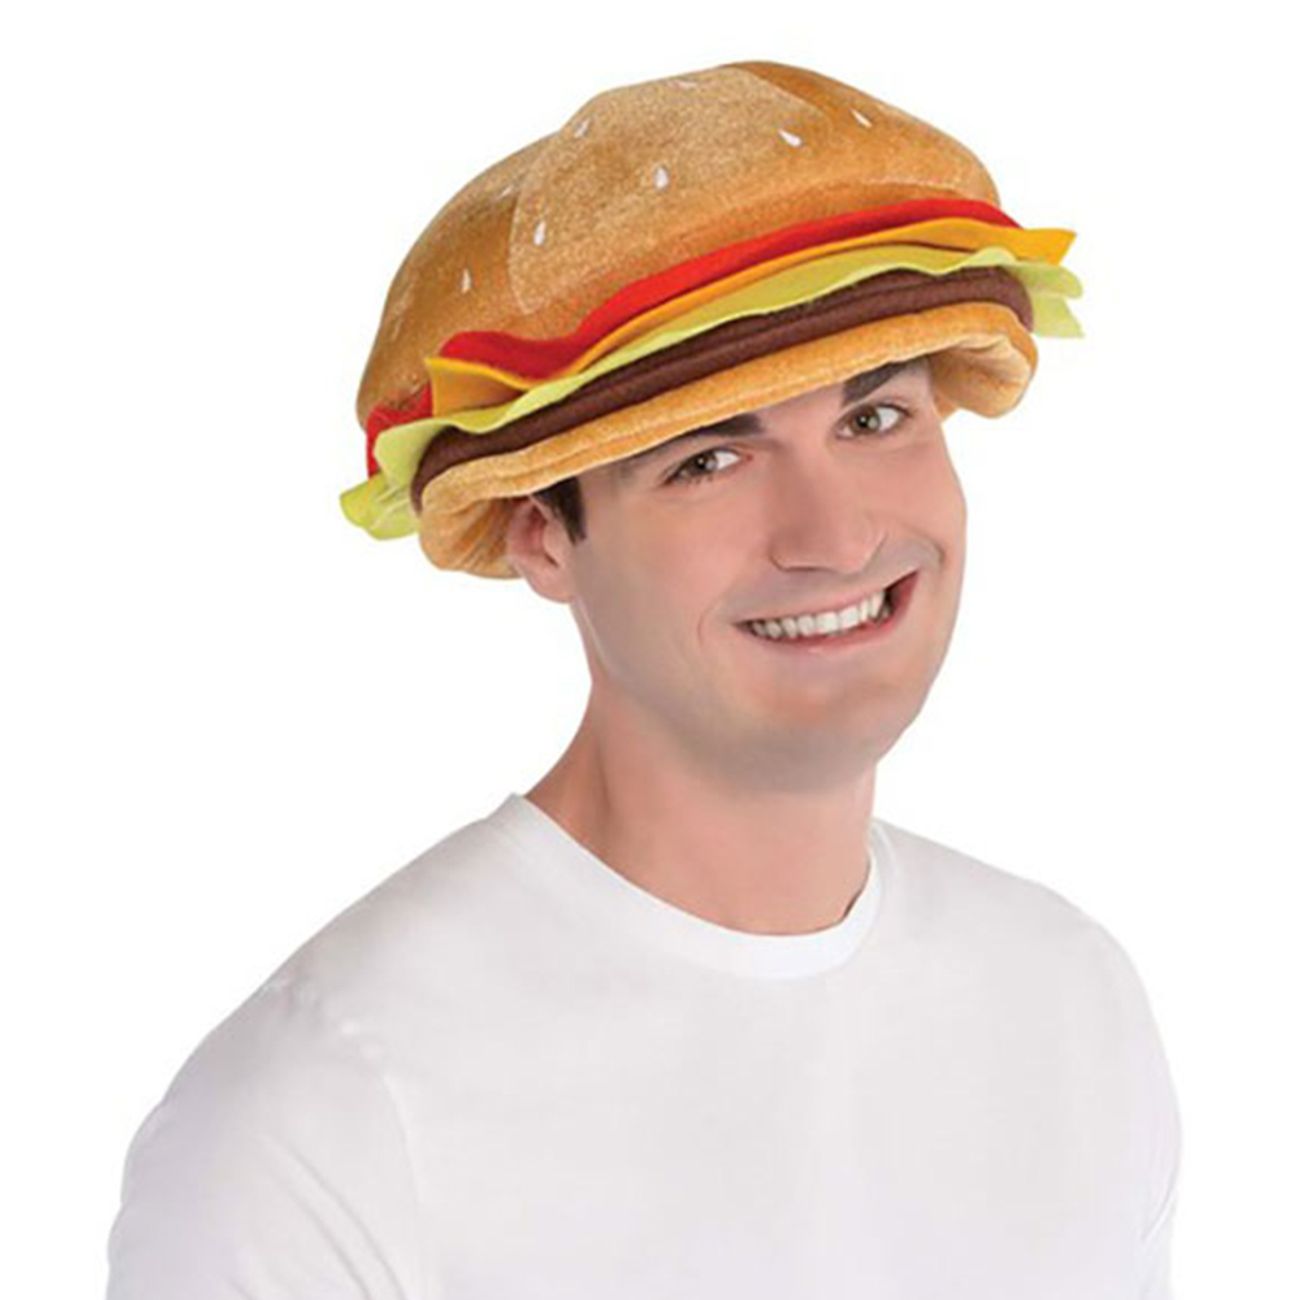 hamburgare-hatt-76811-2